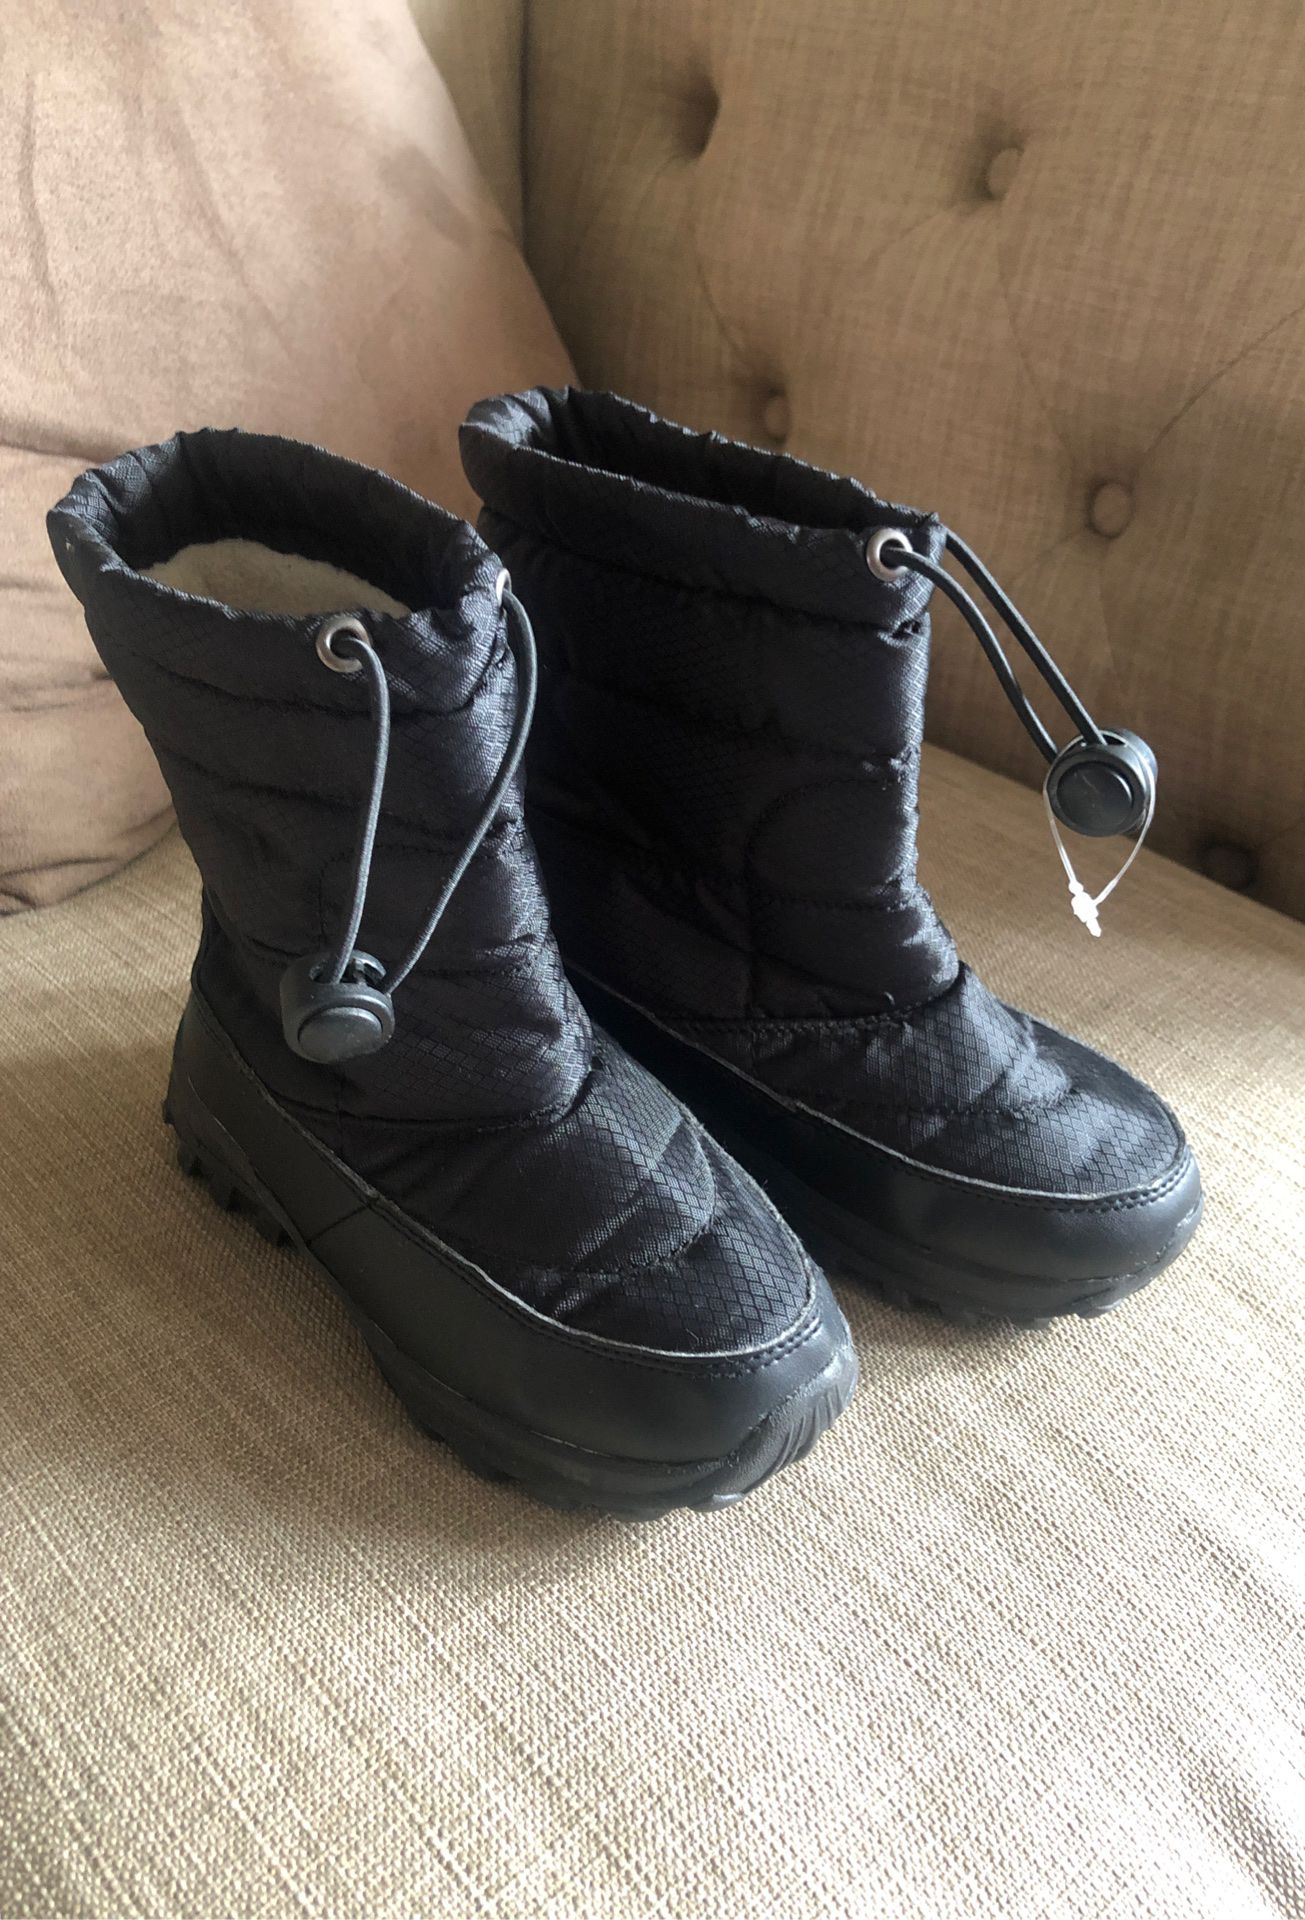 Snow boots kids size 11